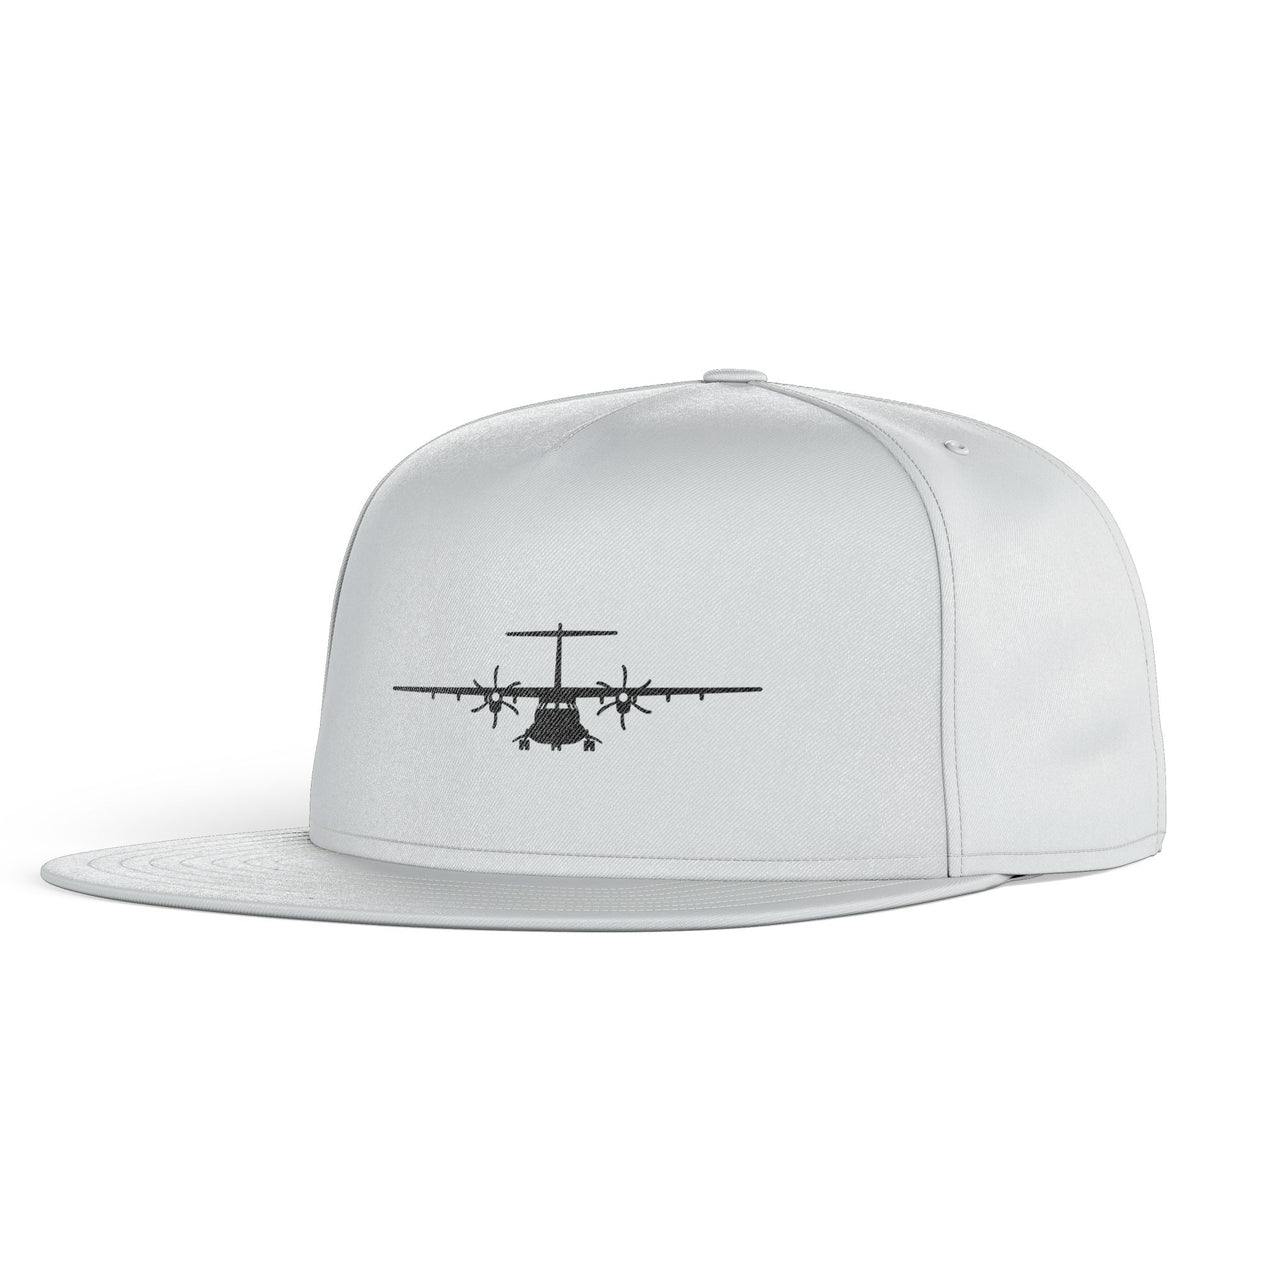 ATR-72 Silhouette Designed Snapback Caps & Hats